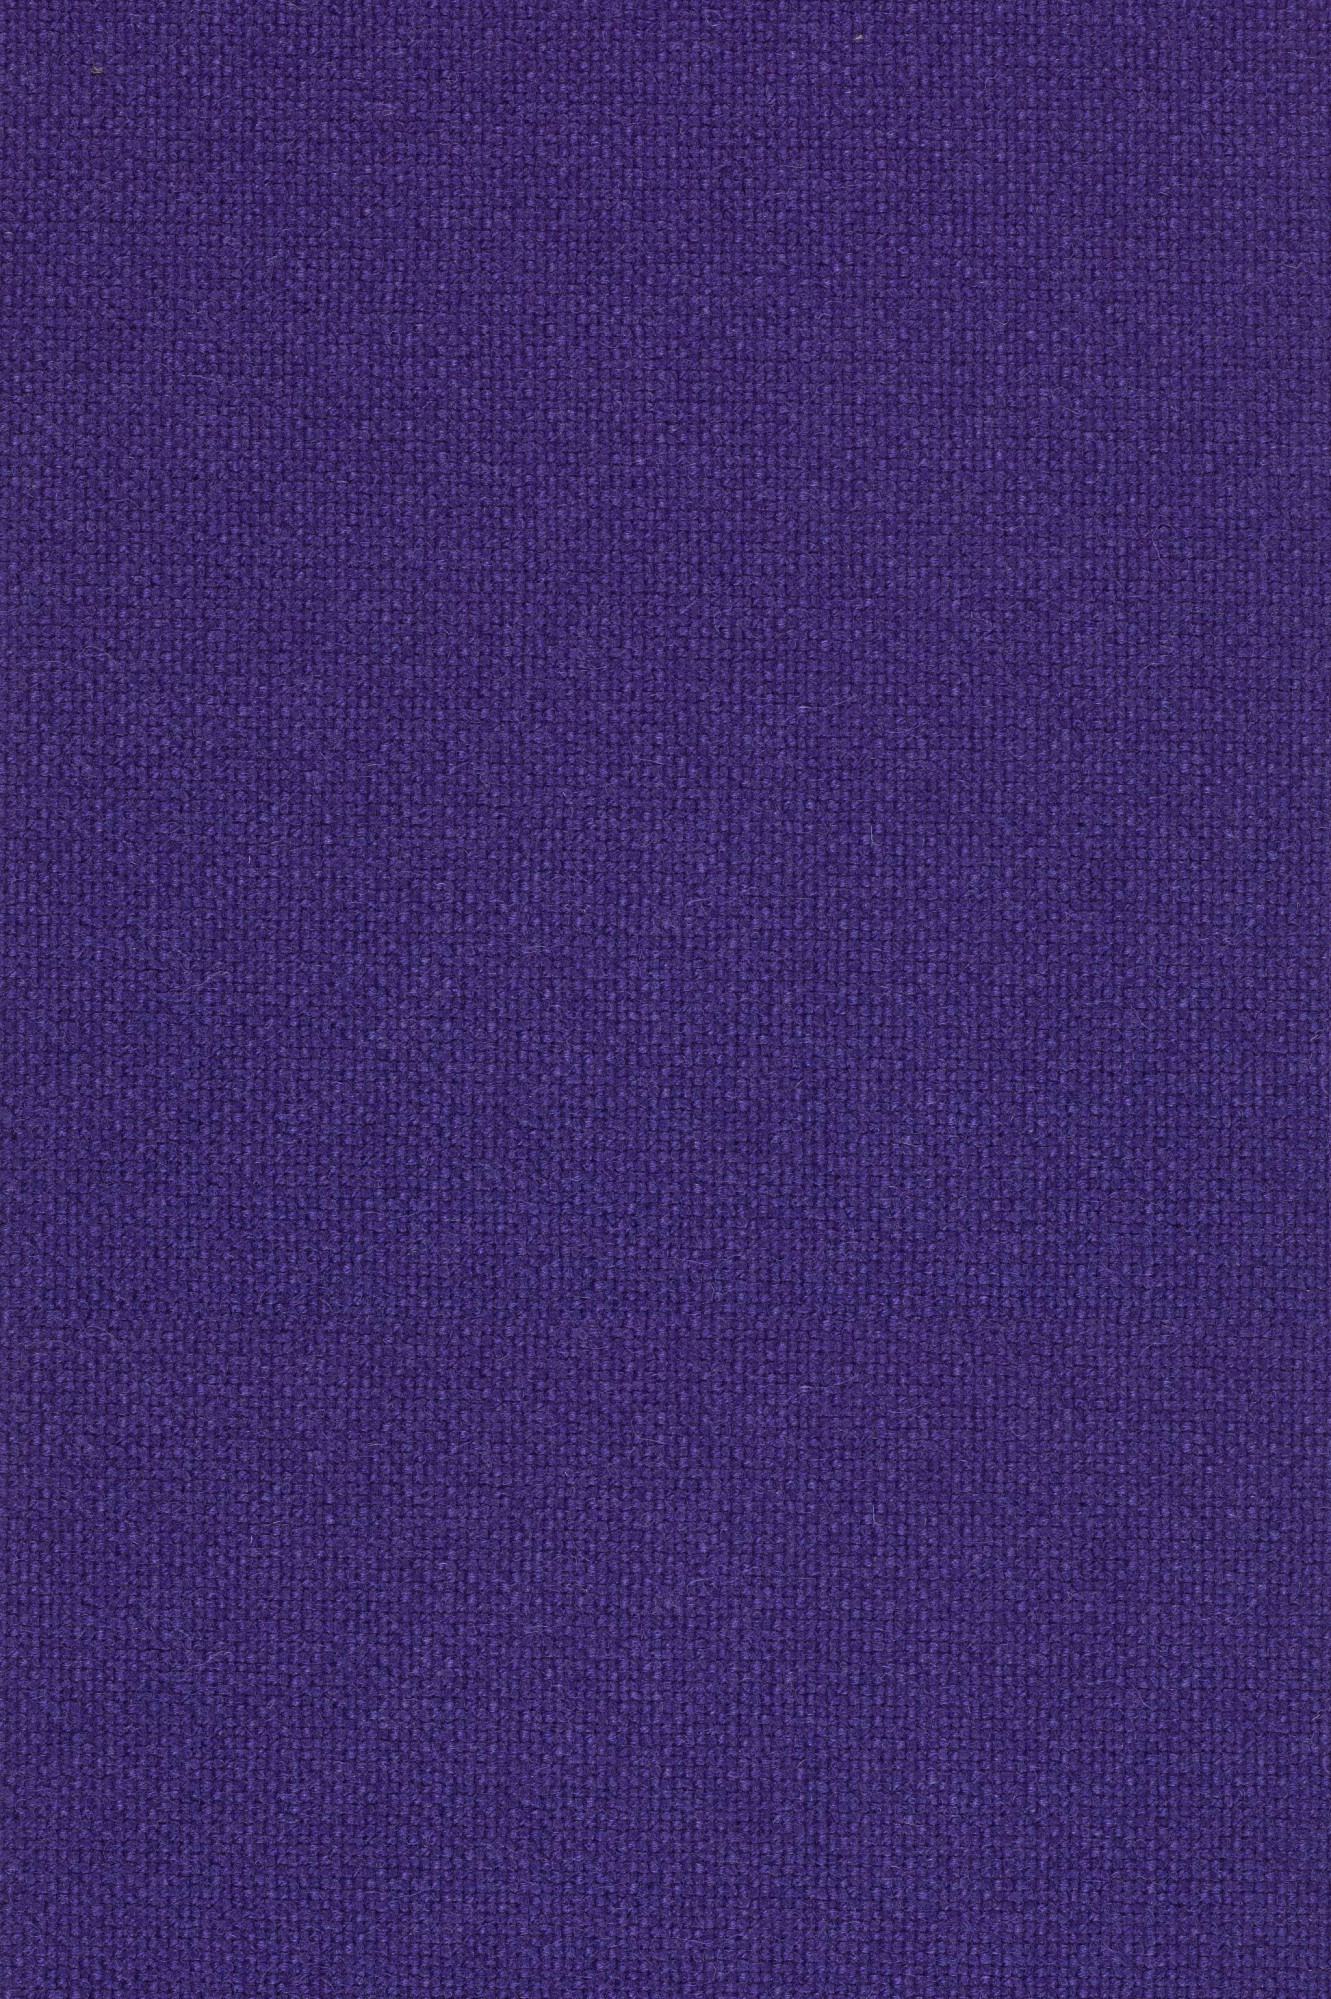 Fabric sample Hallingdal 65 702 blue